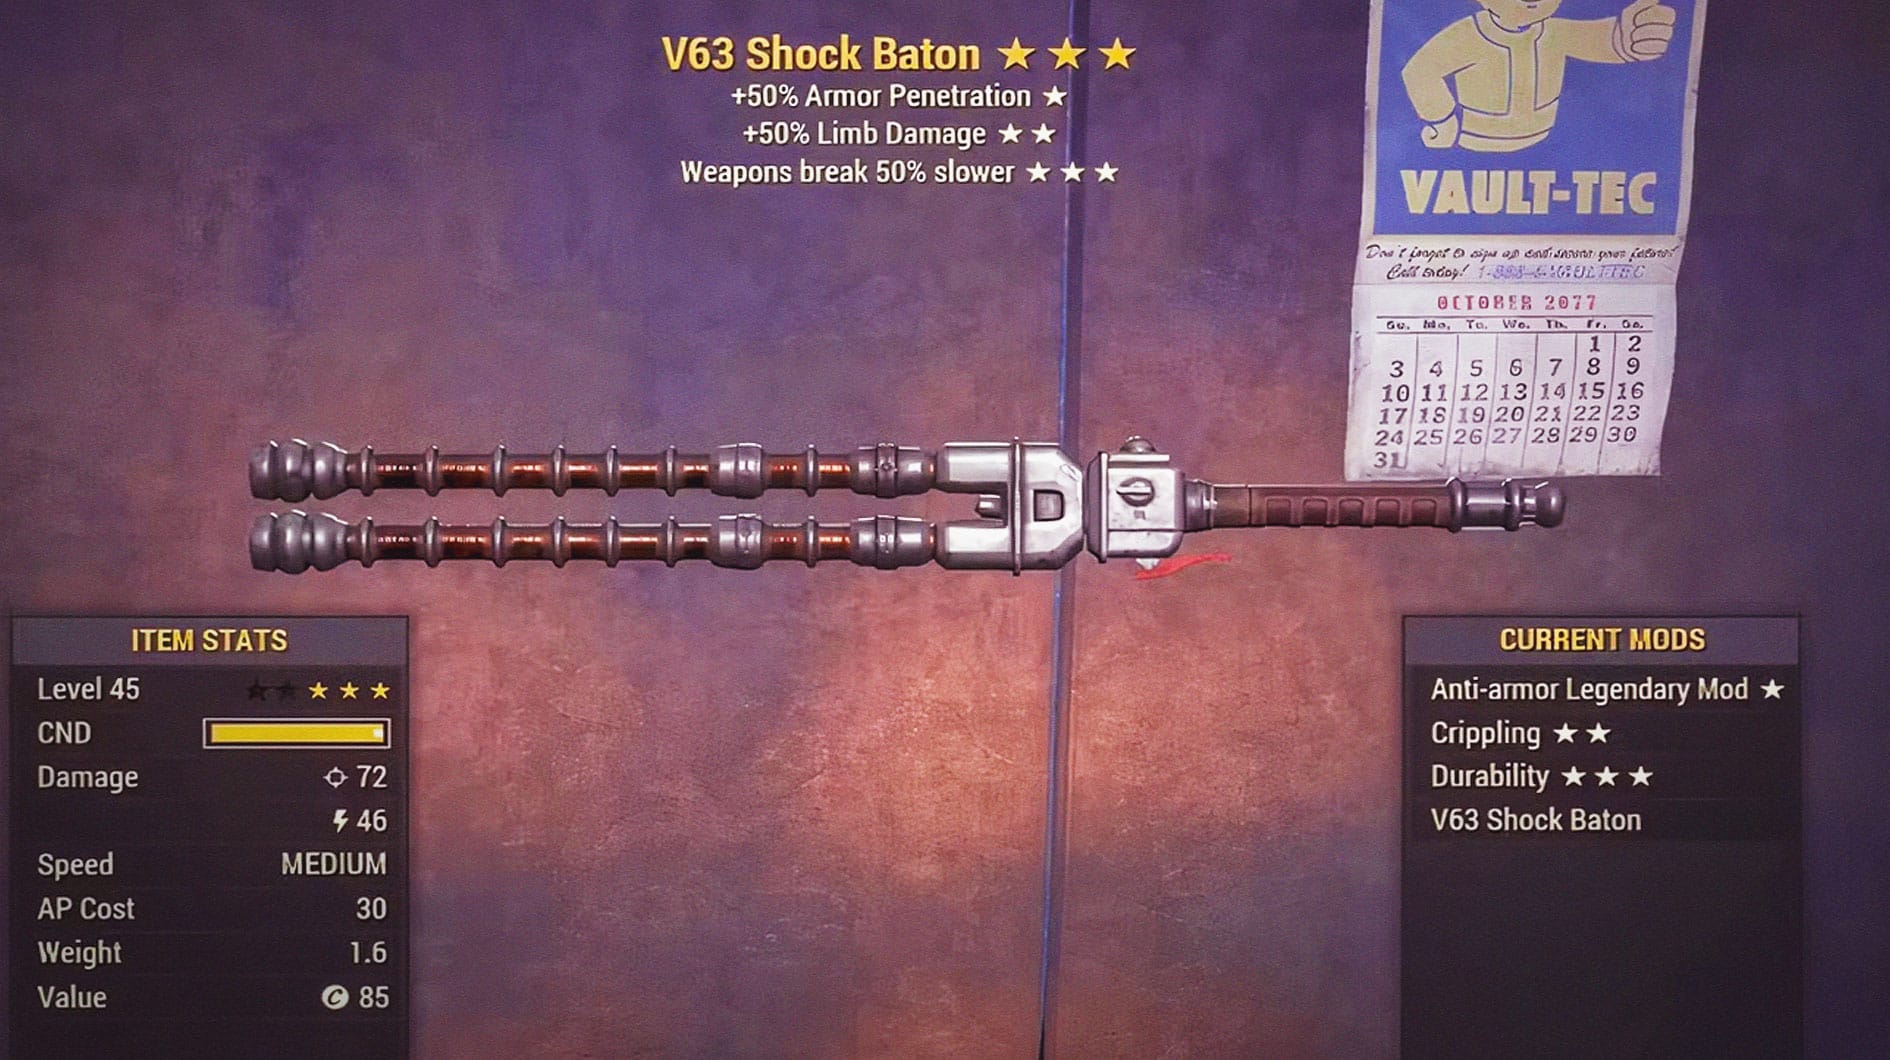 Image of the V63 Shock Batton